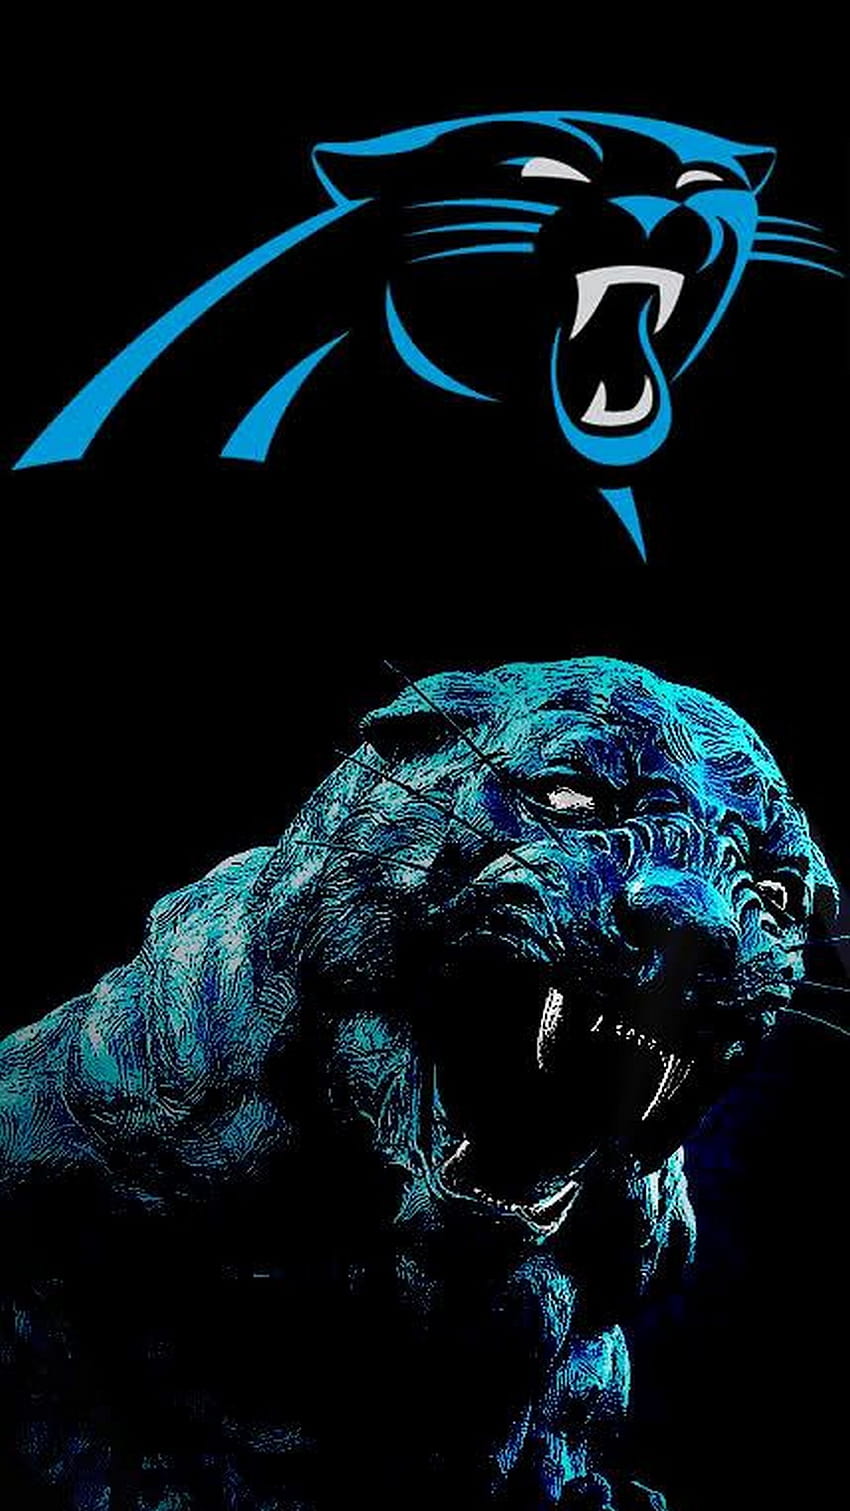 Carolina Panthers on X Gameday wallpaper  httpstcomTrvkhSv05  X